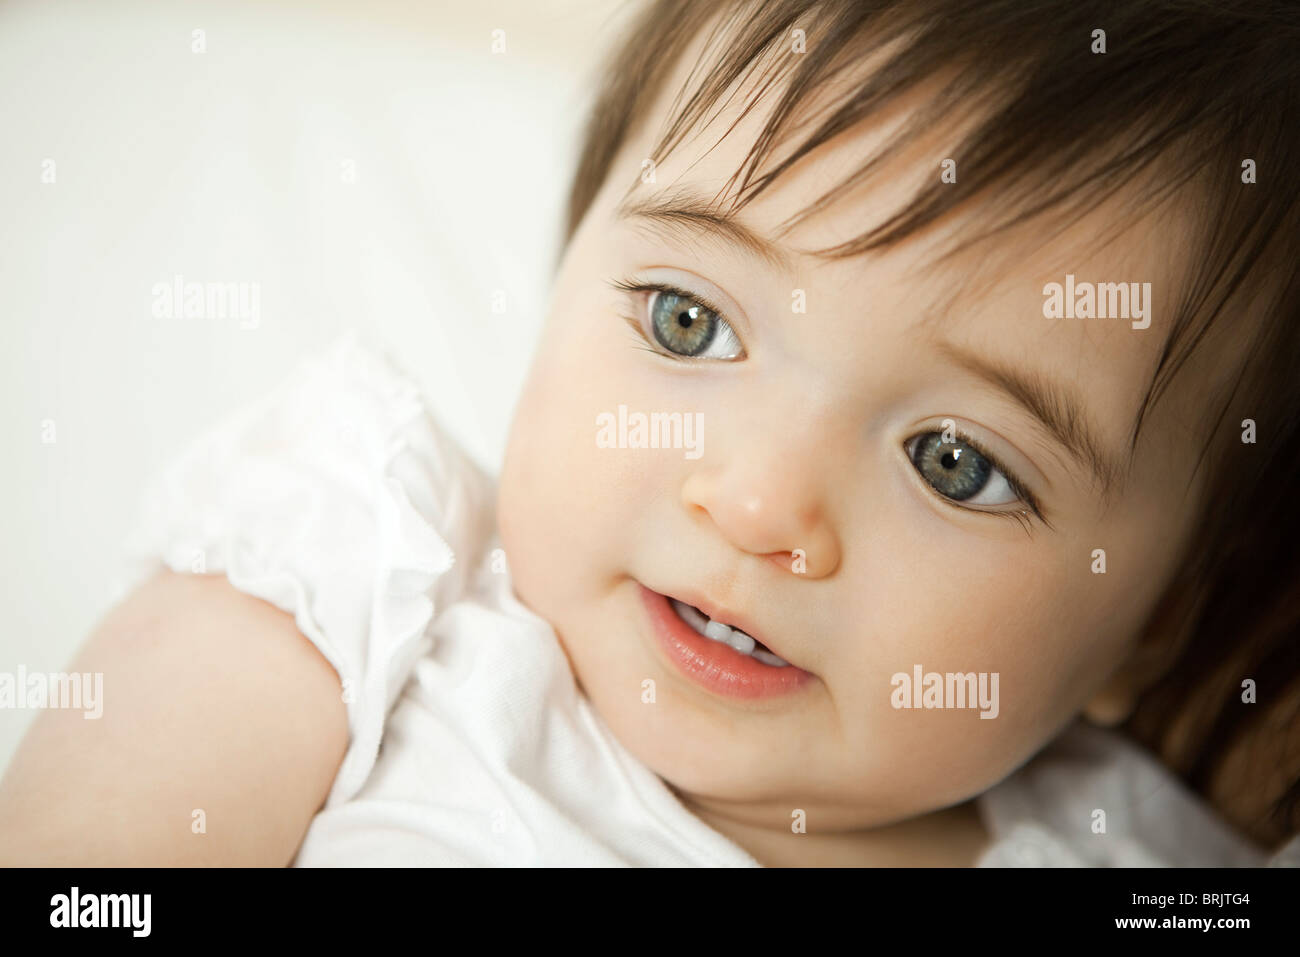 Baby girl, portrait Stock Photo